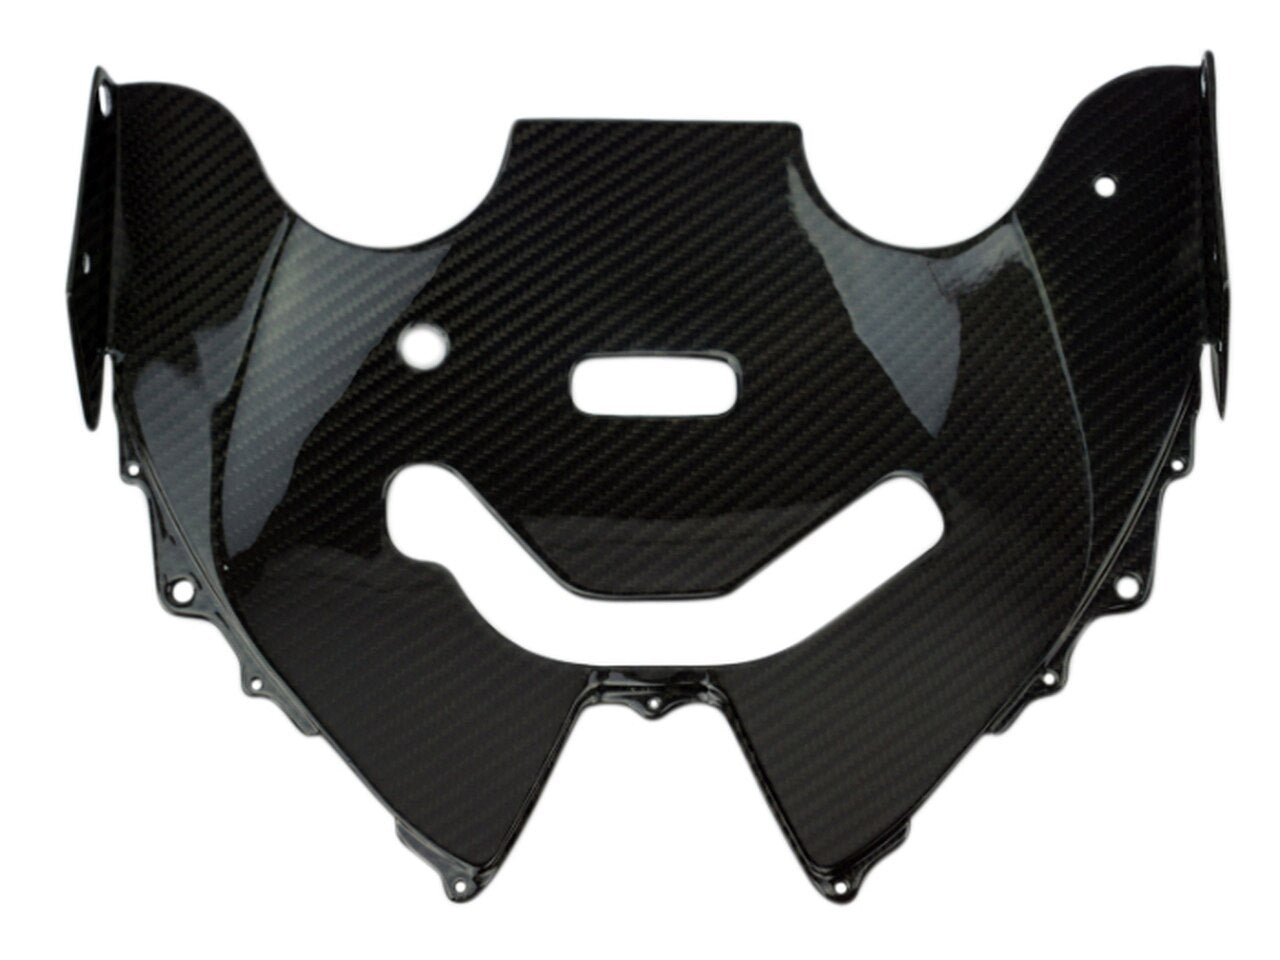 Motocomposites Cockpit Cover in Carbon with Fiberglass for Kawasaki Ninja H2